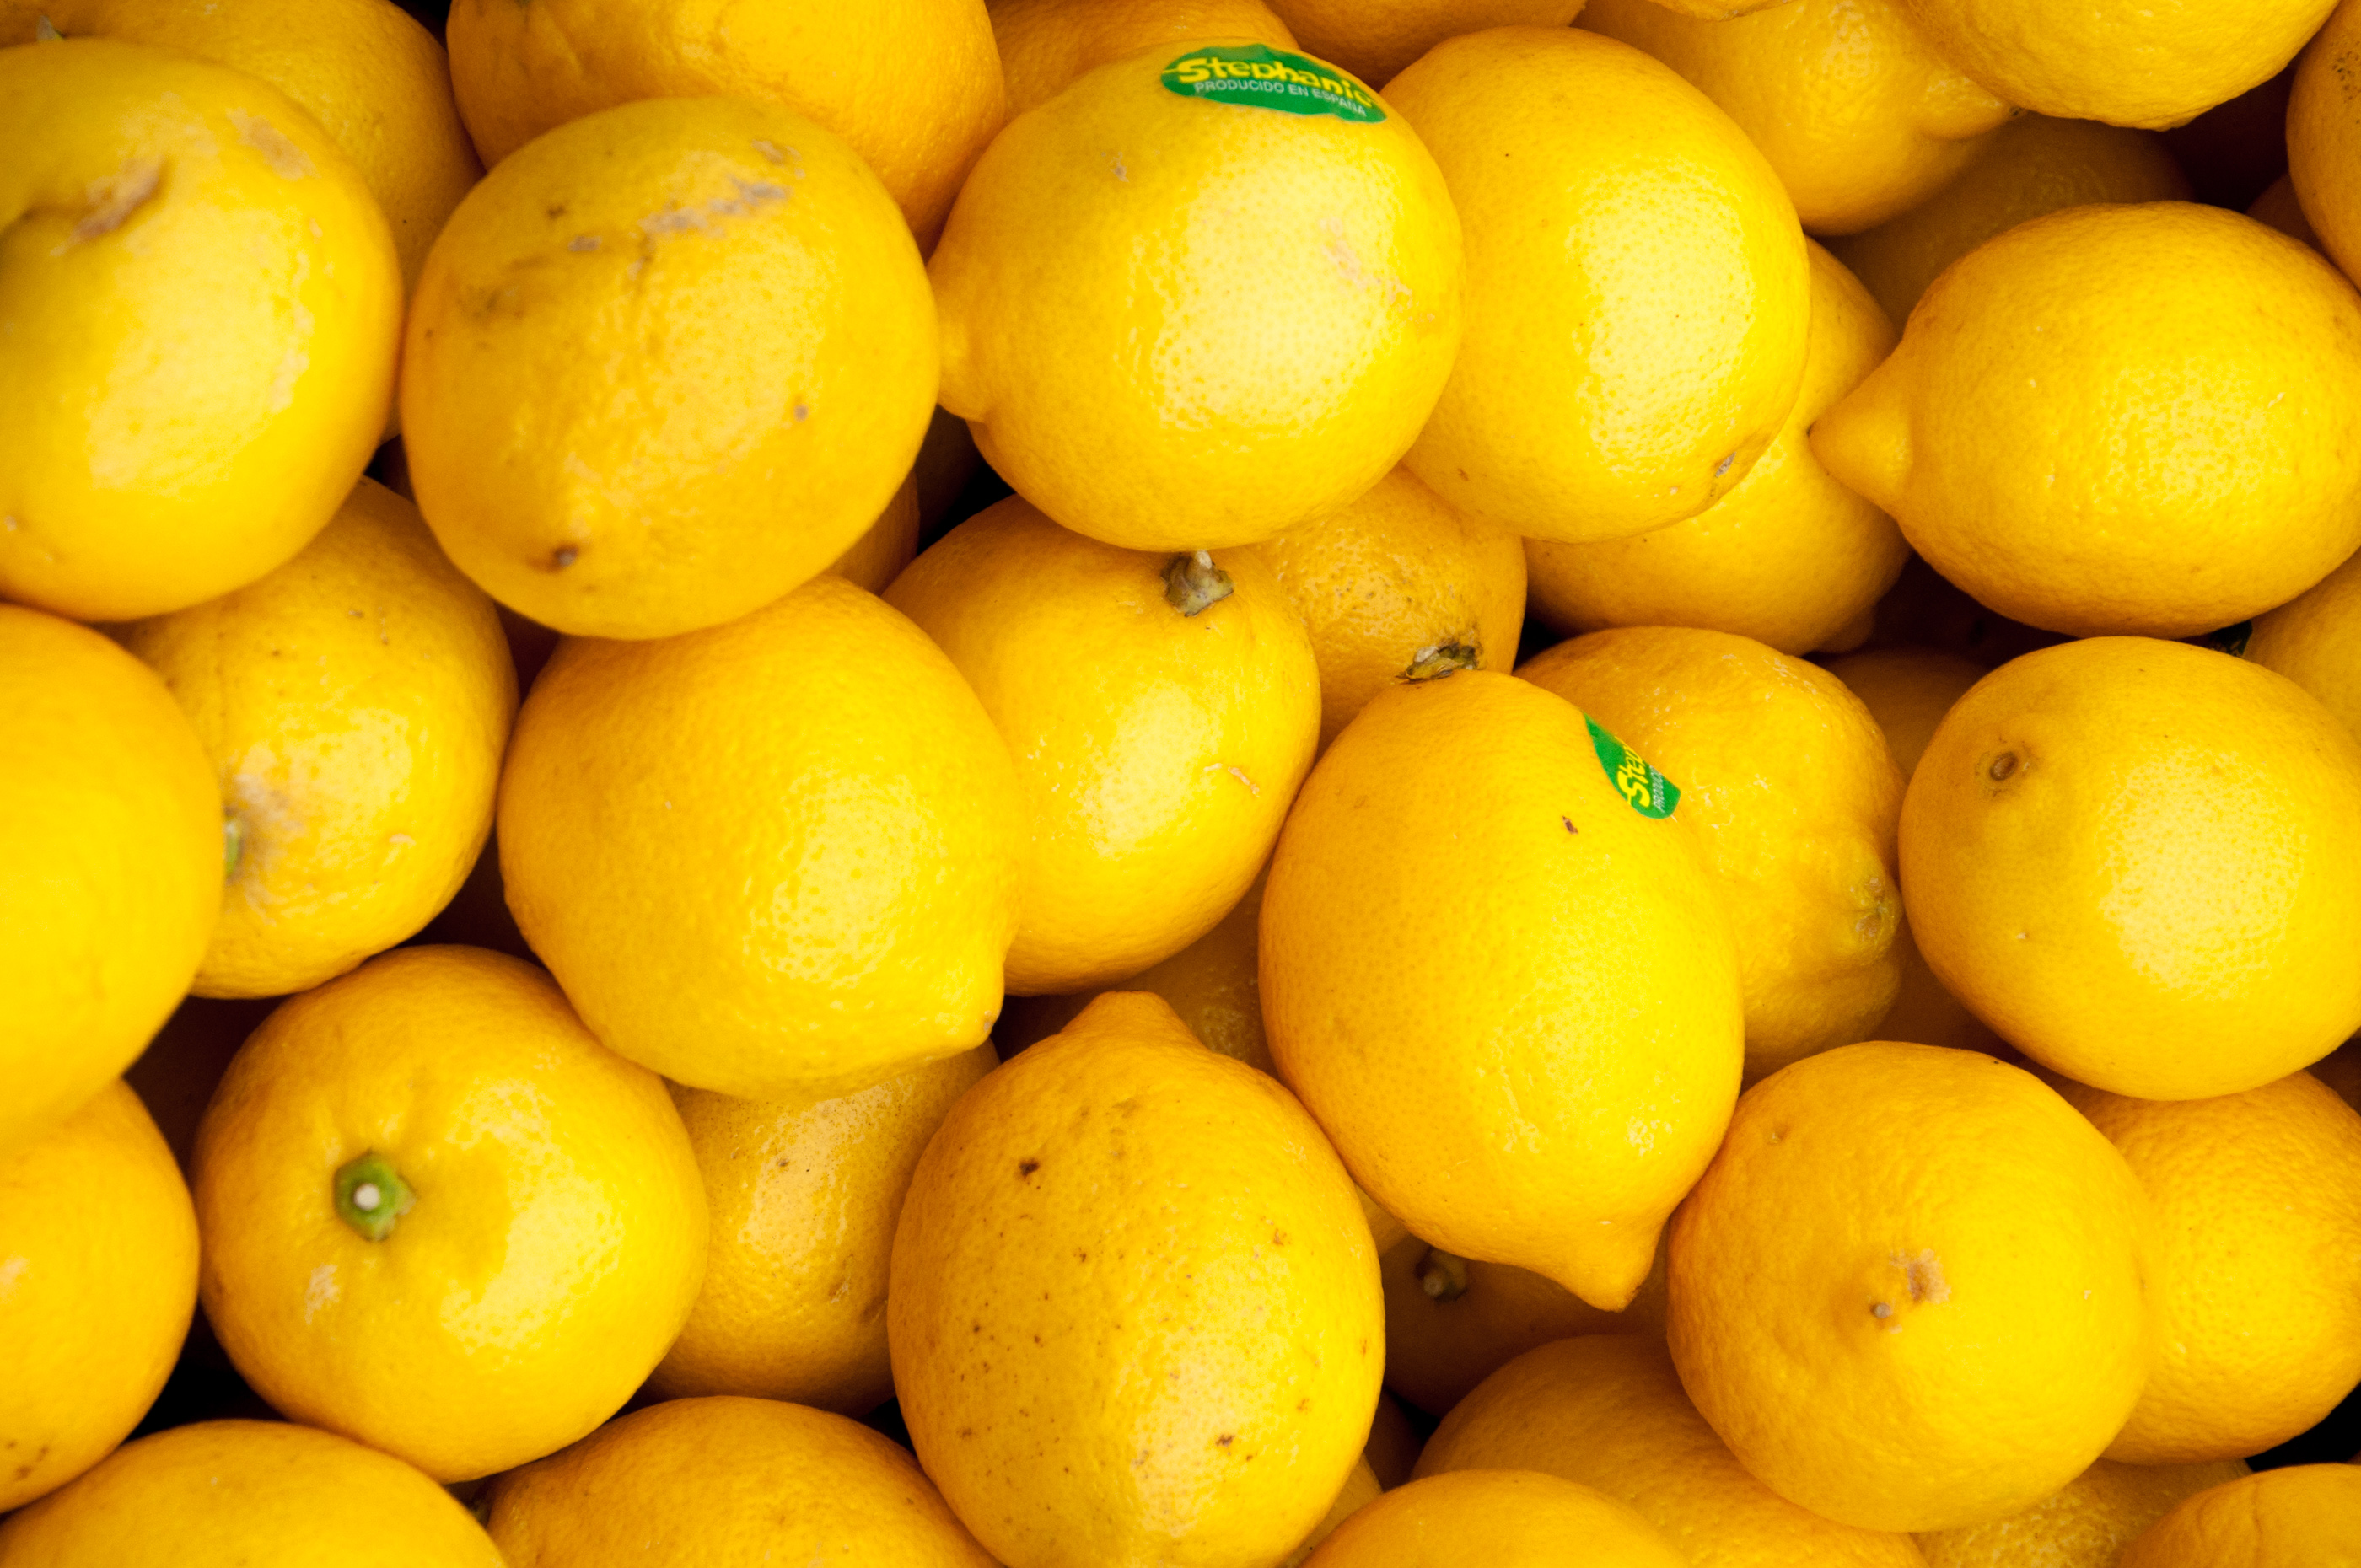 Colorful display of lemons in market photo